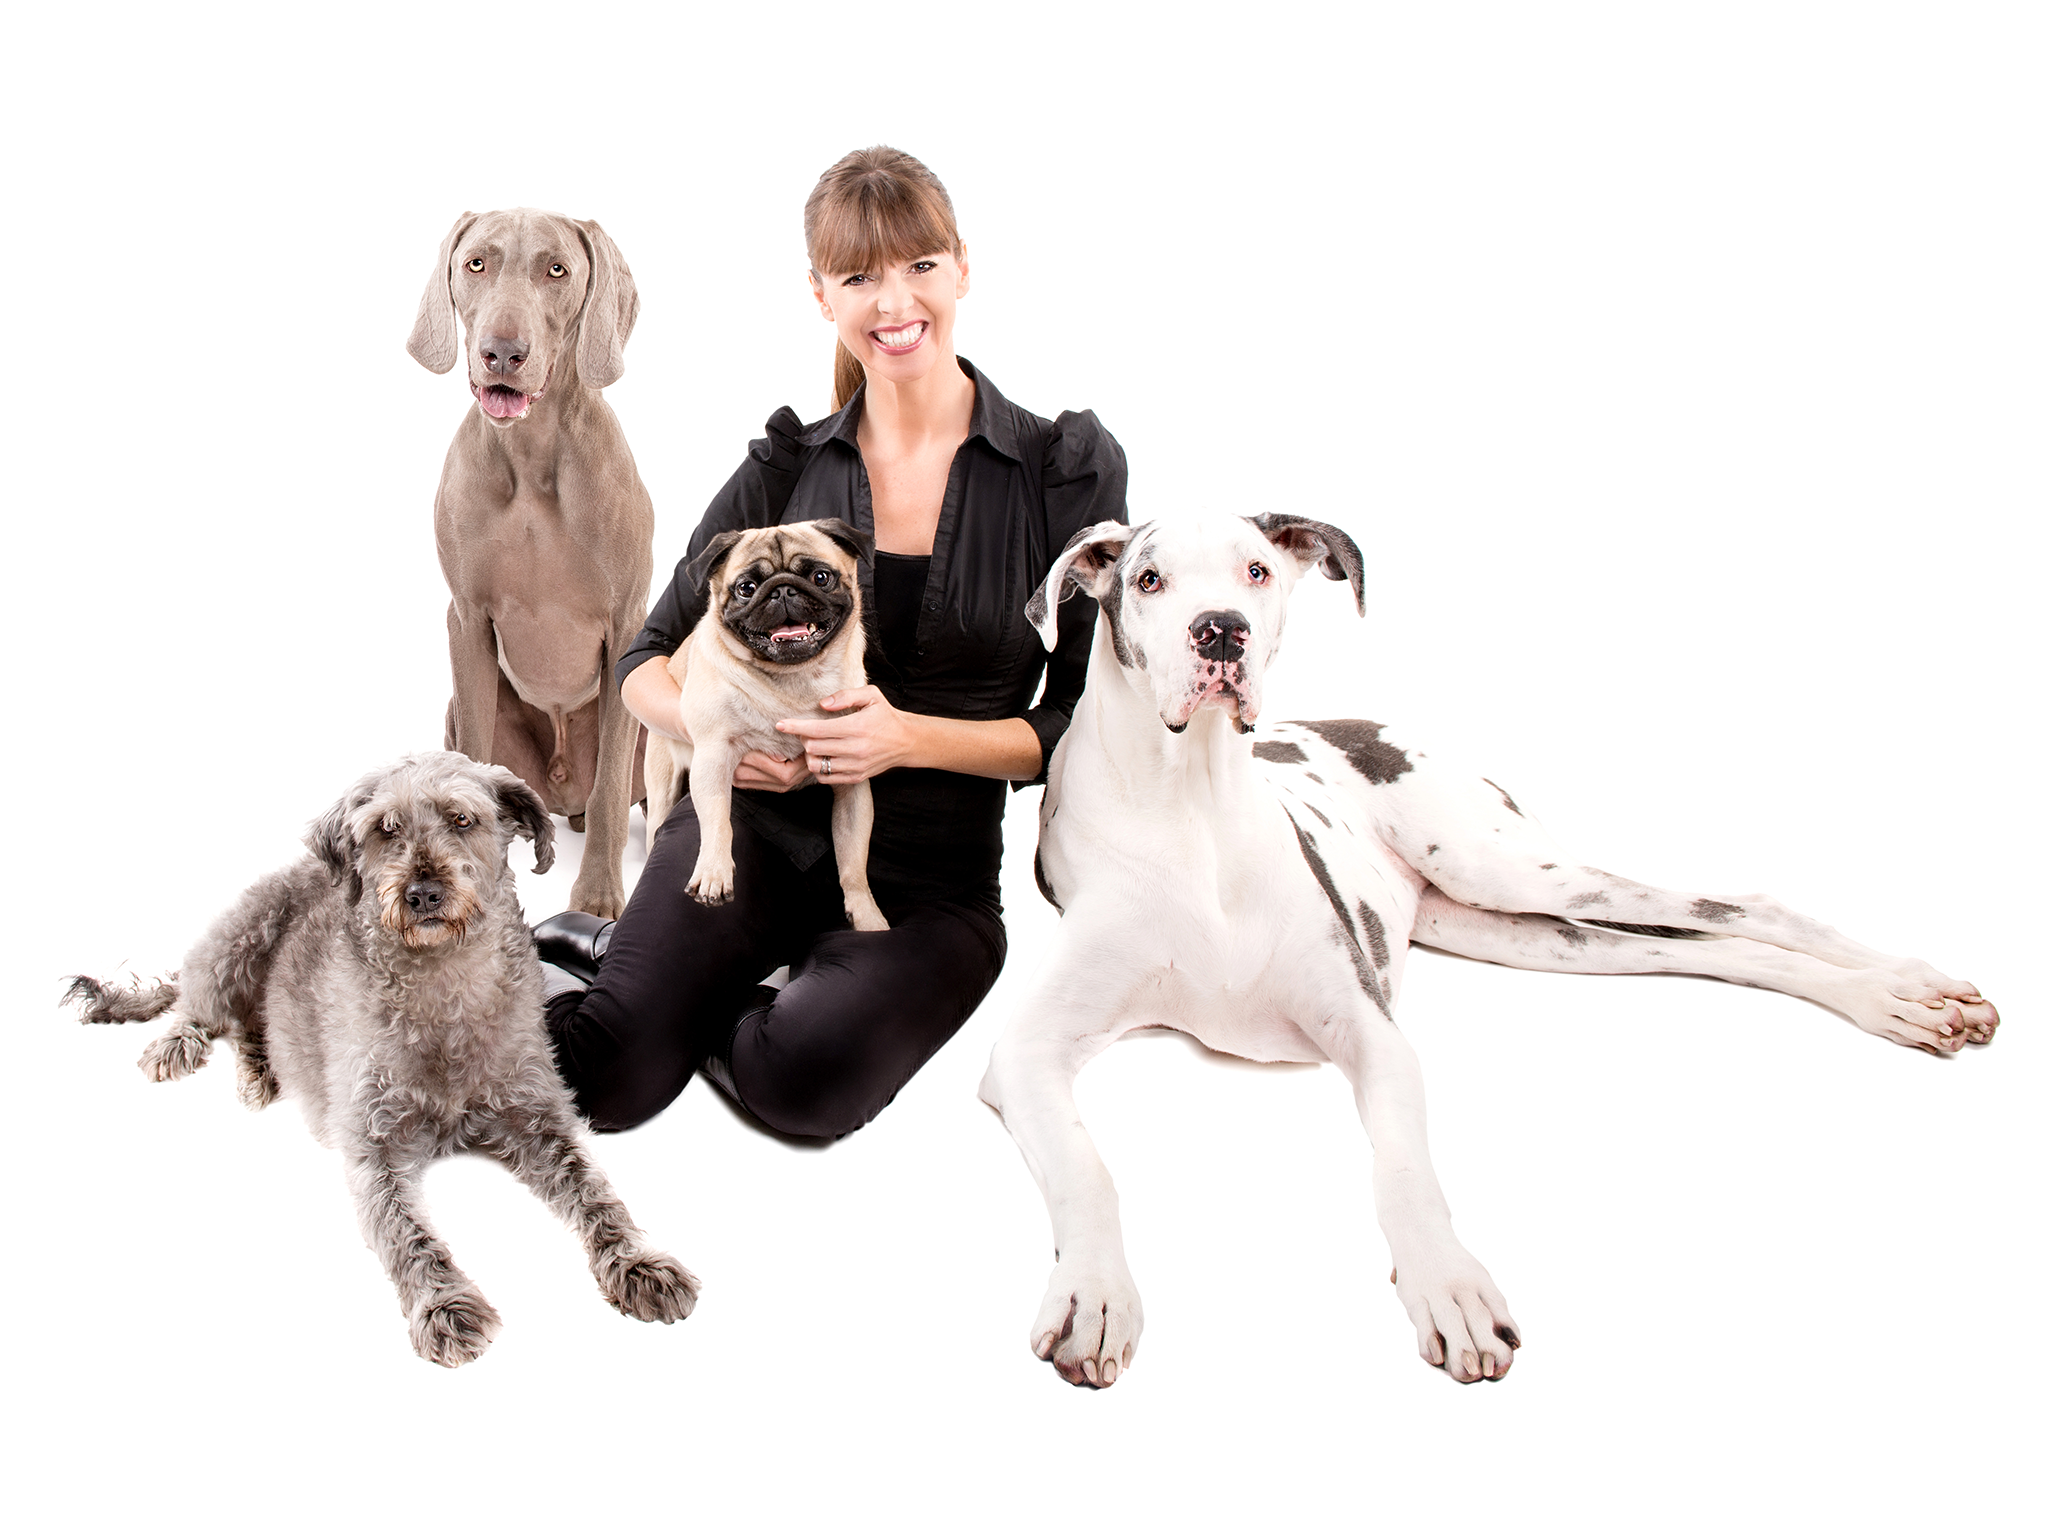 Dog trainer and TV presenter Victoria Stilwell